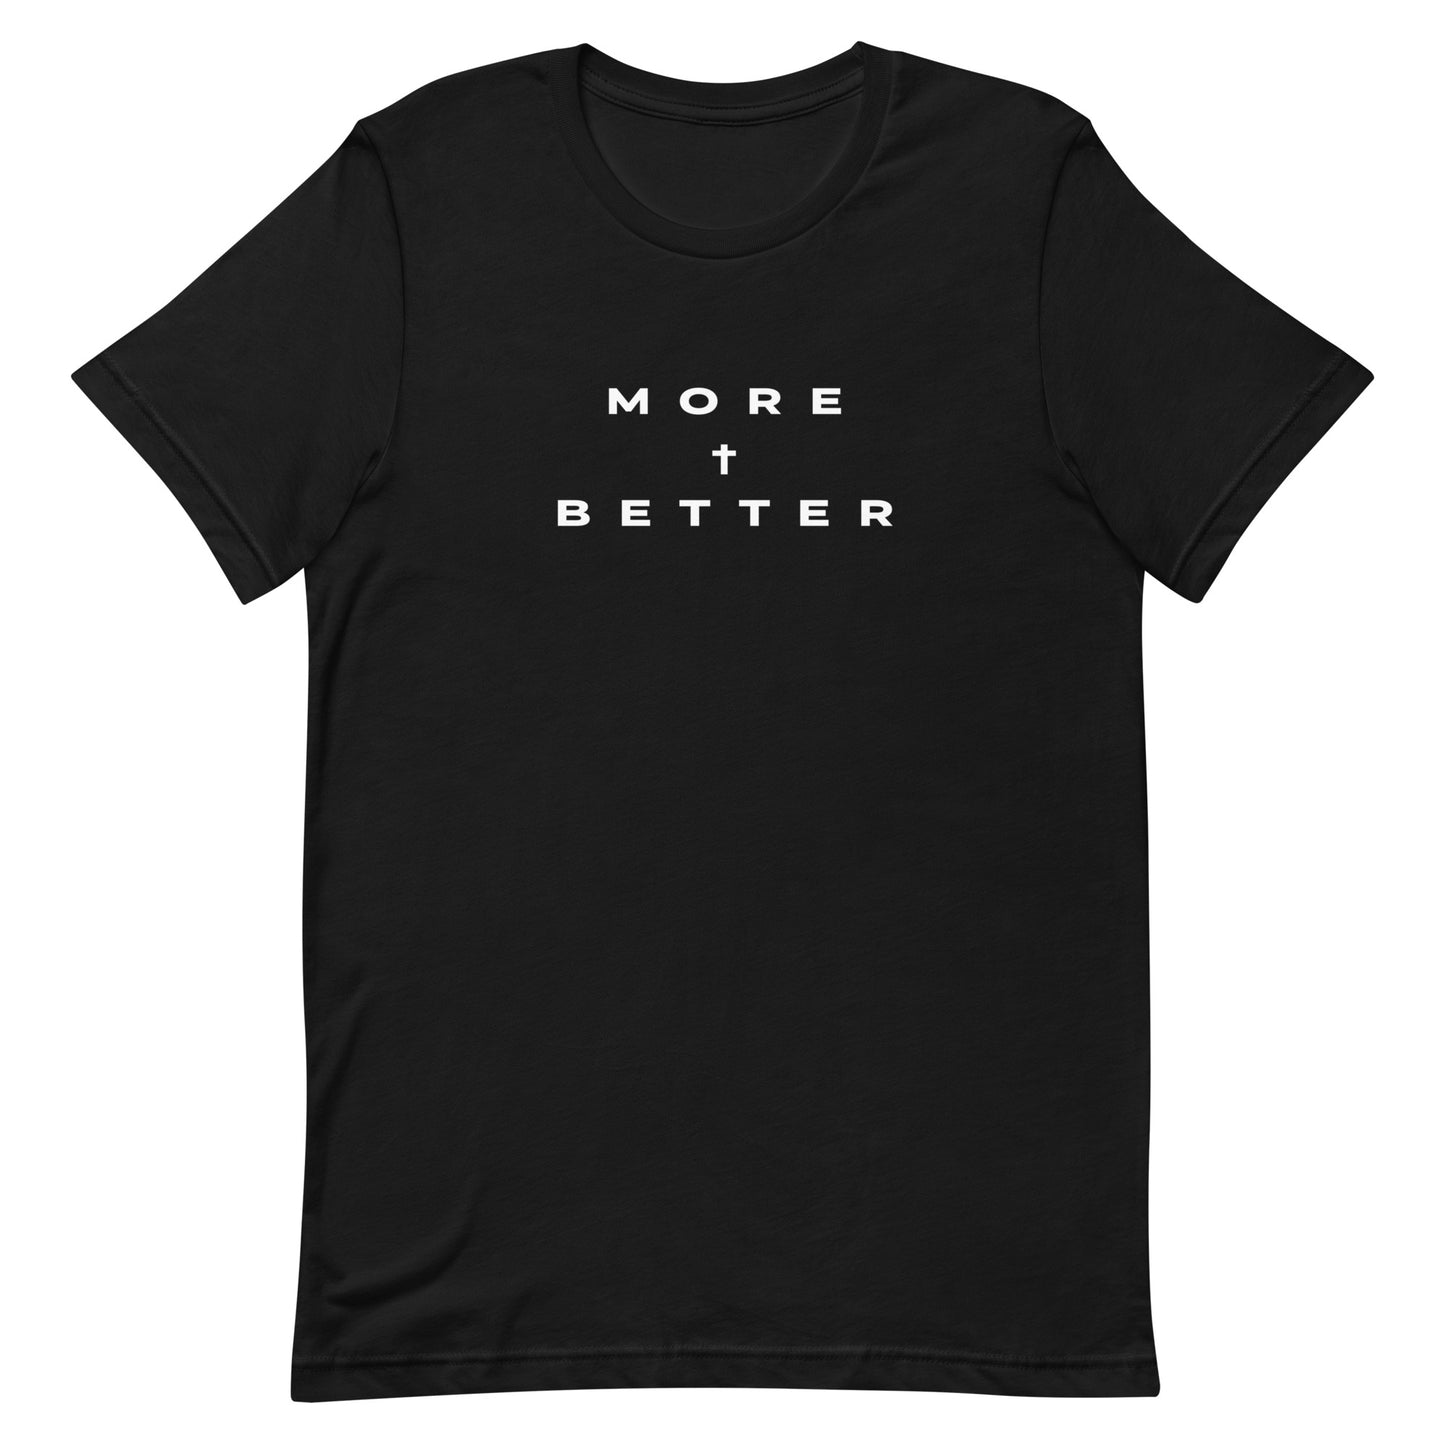 More + Better Unisex t-shirt